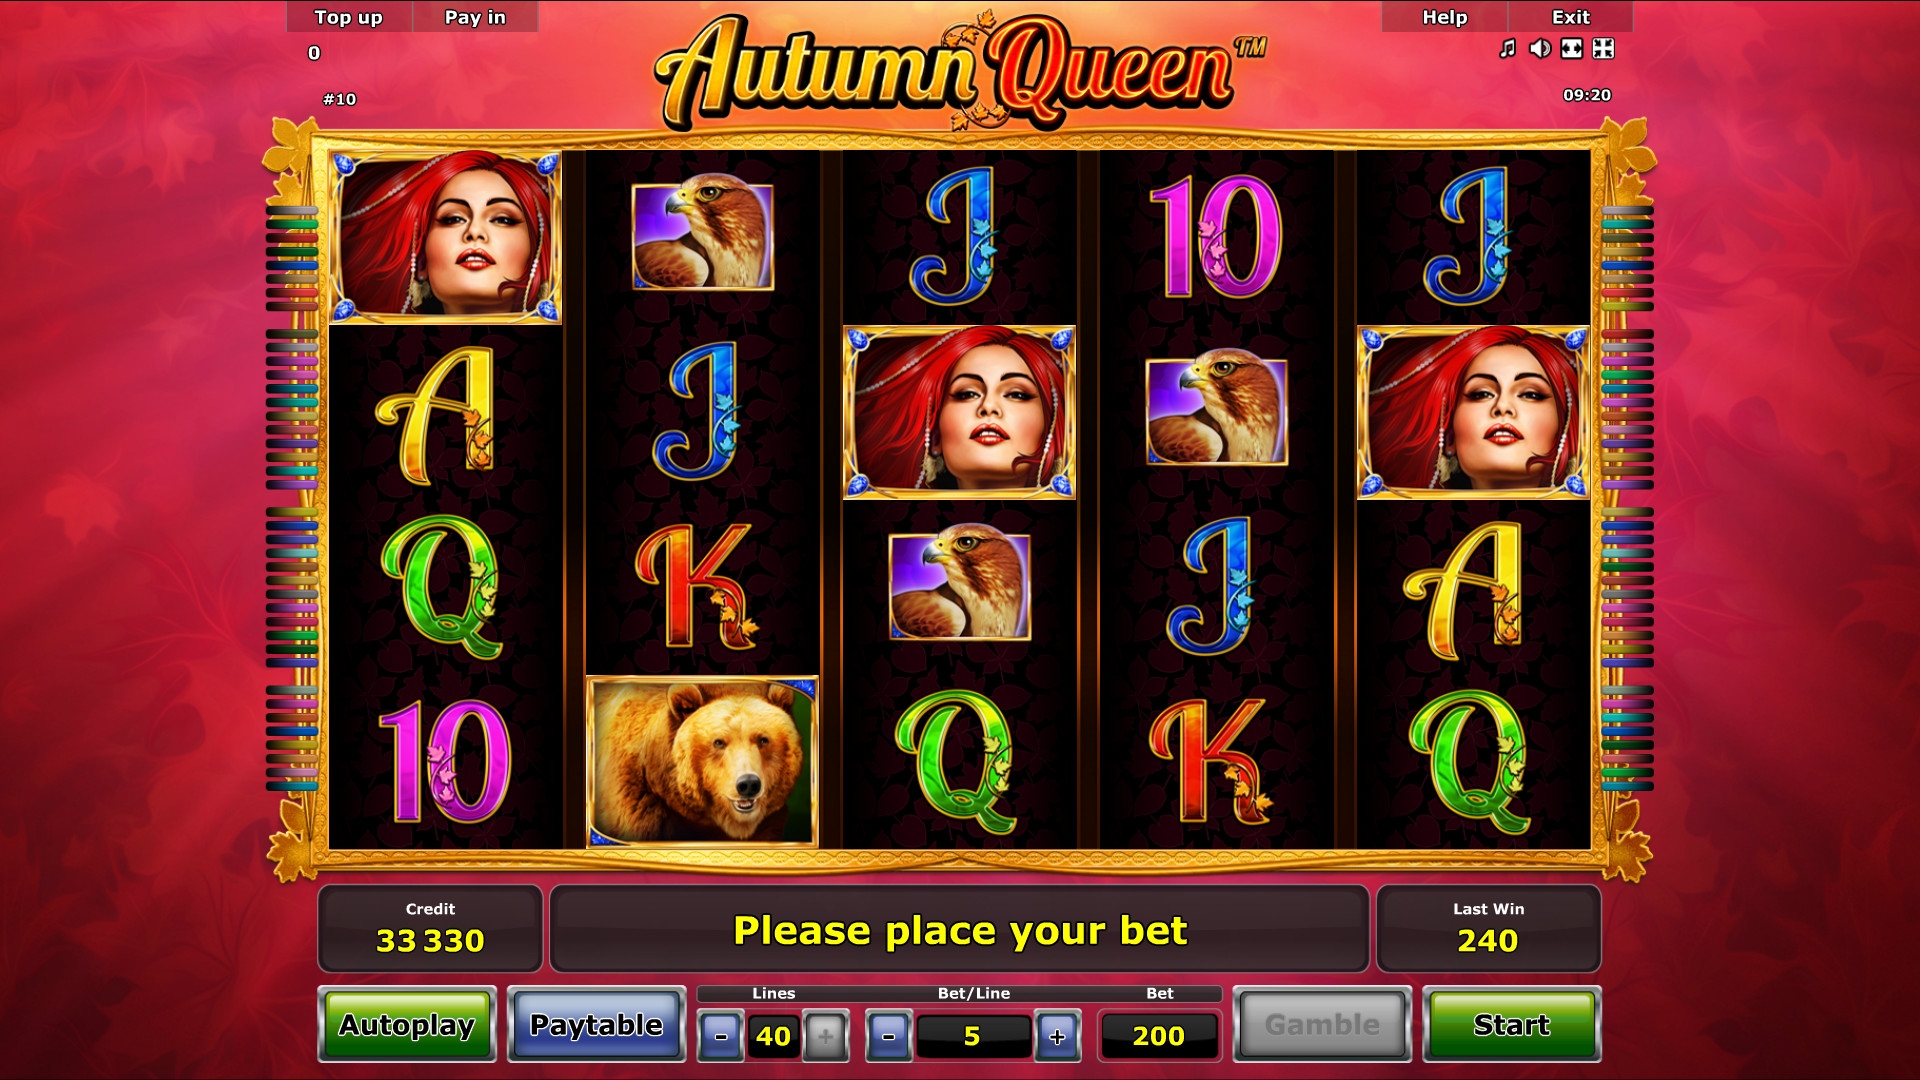 Autumn Queen (Autumn Queen) from category Slots